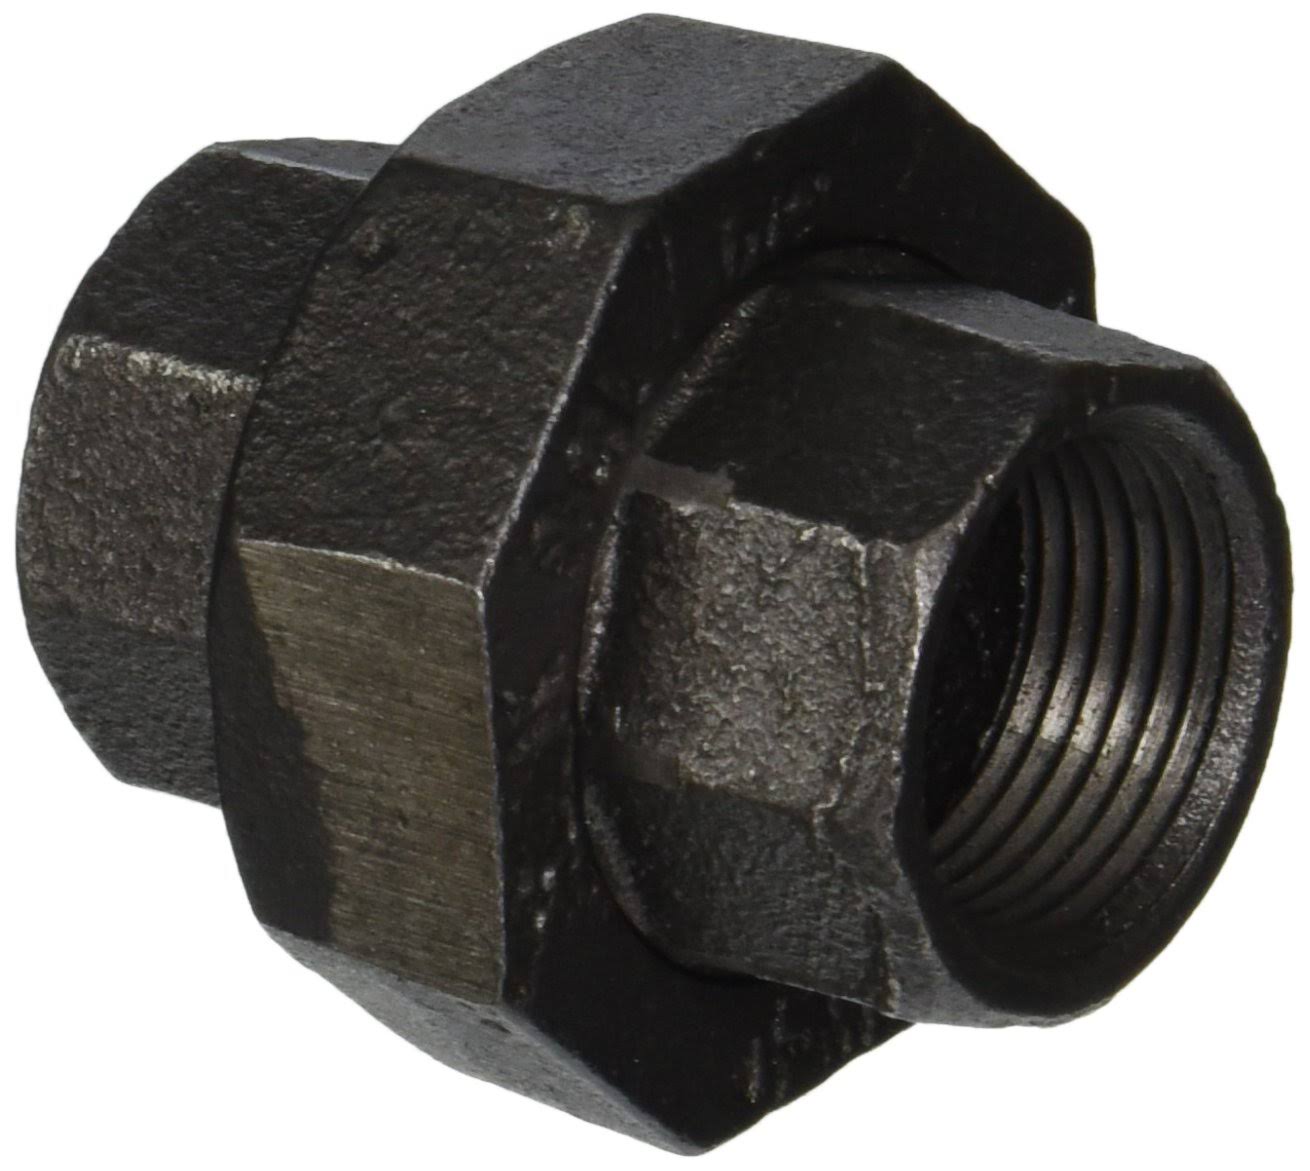 LDR 310U34 Black Union Pipe Fitting - 3/4"